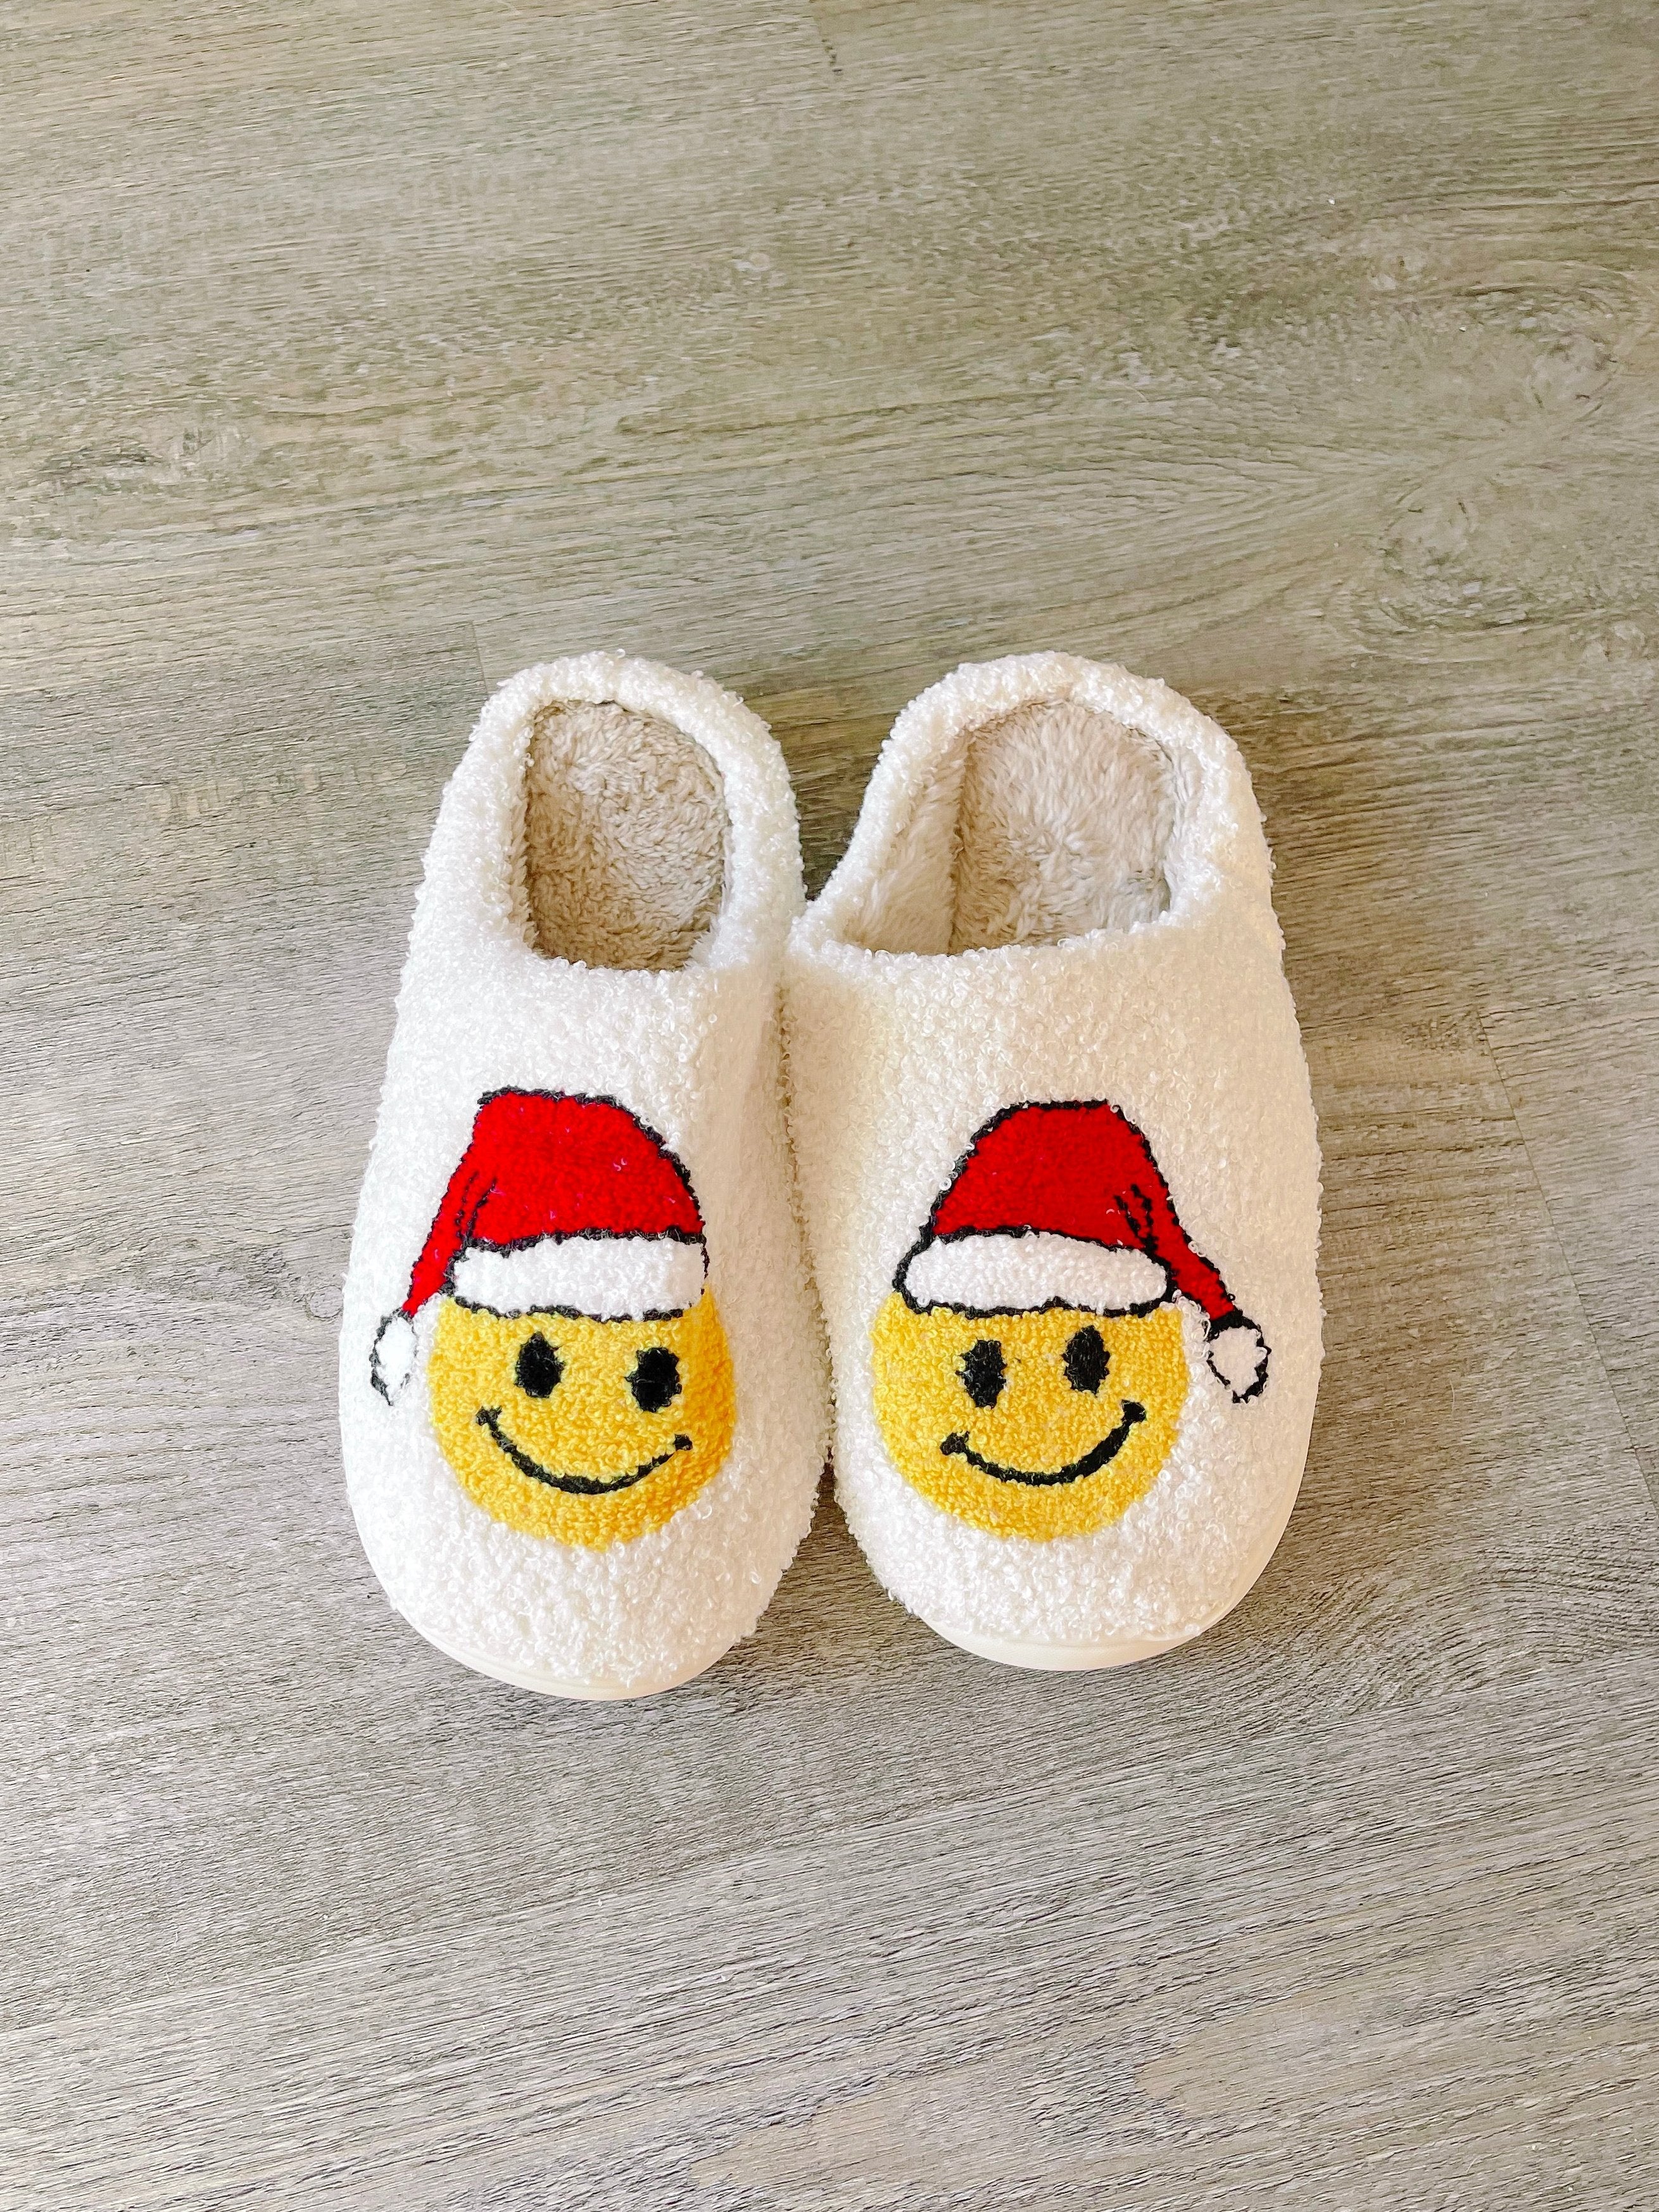 Santa Smiley Face Slippers | Sassy Shortcake | sassyshortcake.com